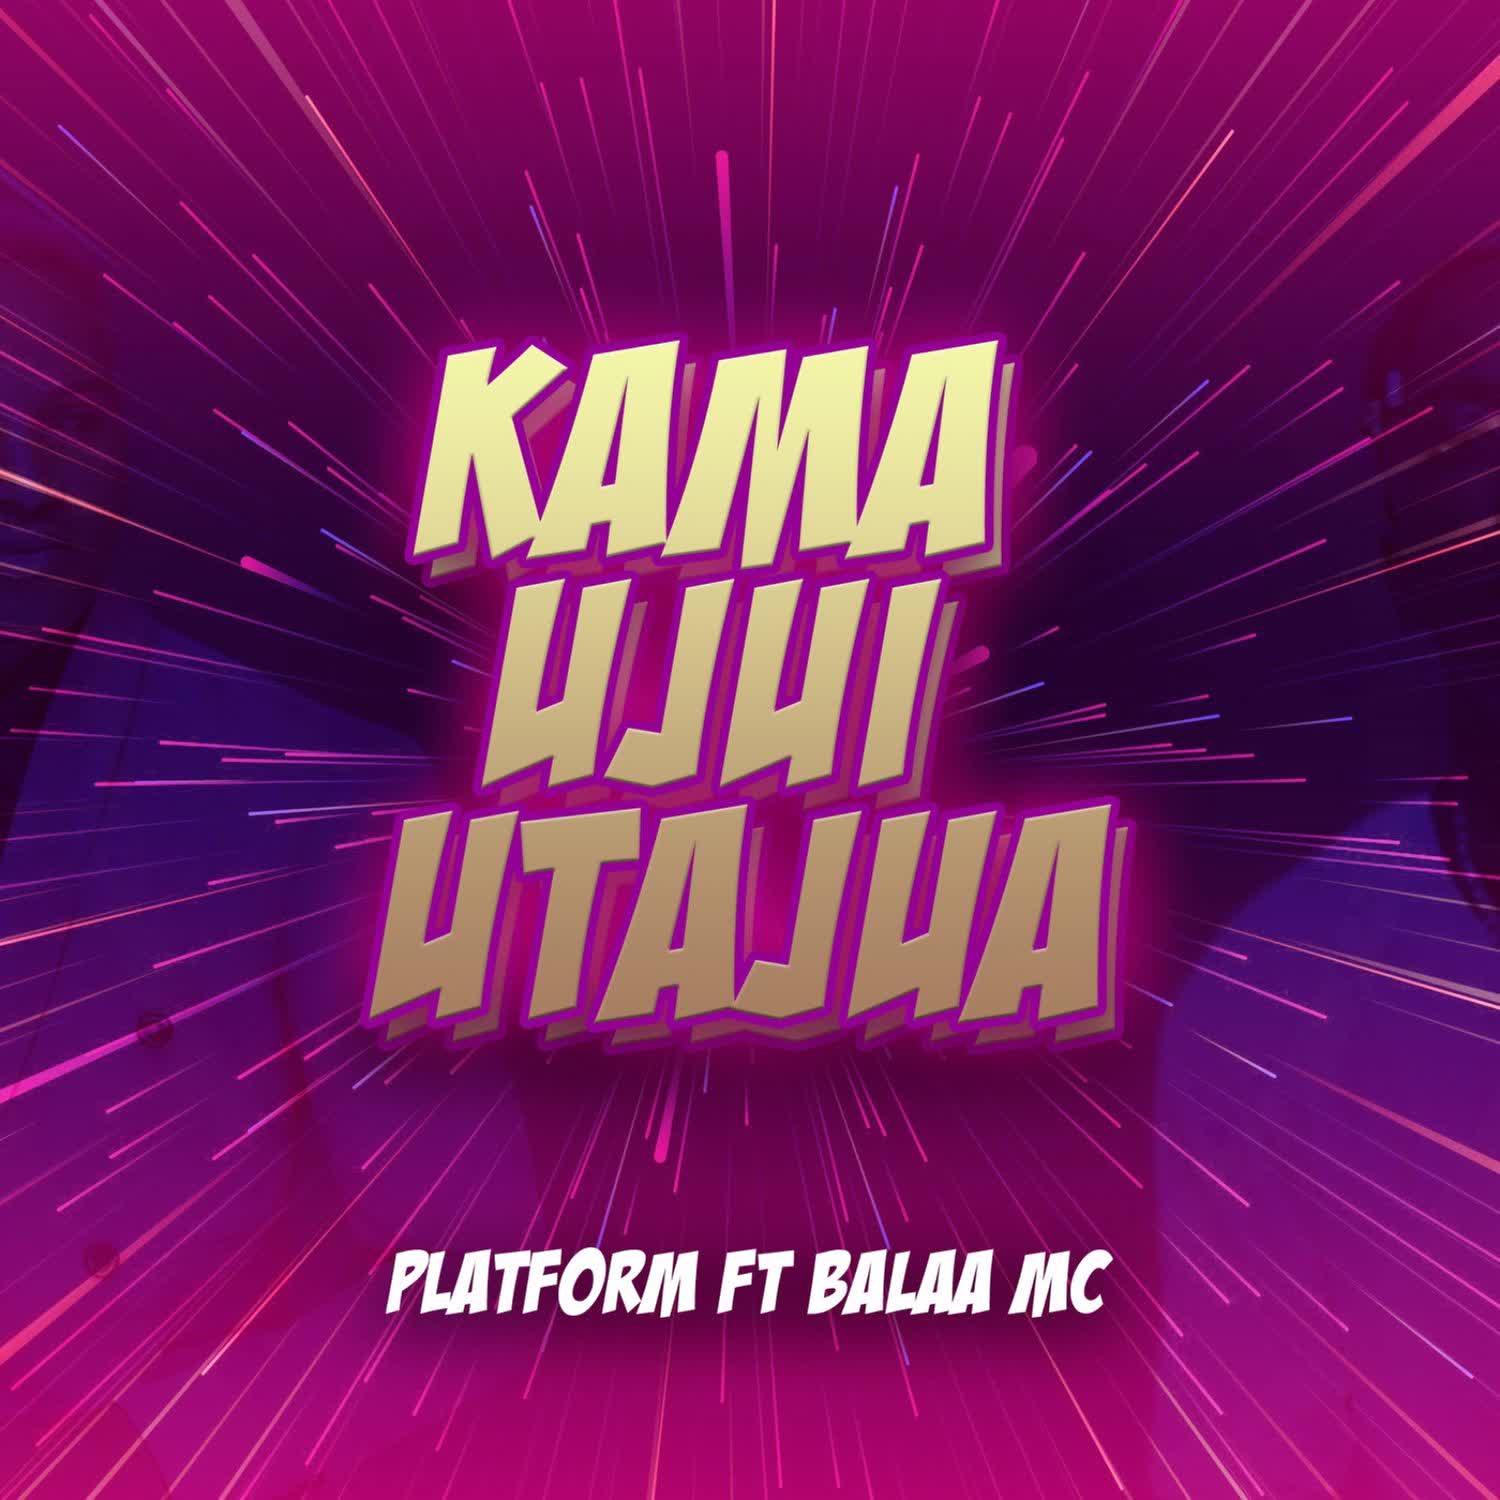 Platform Tz ft Balaa Mc Kama Ujui Utajua Mp3 Download fakaza